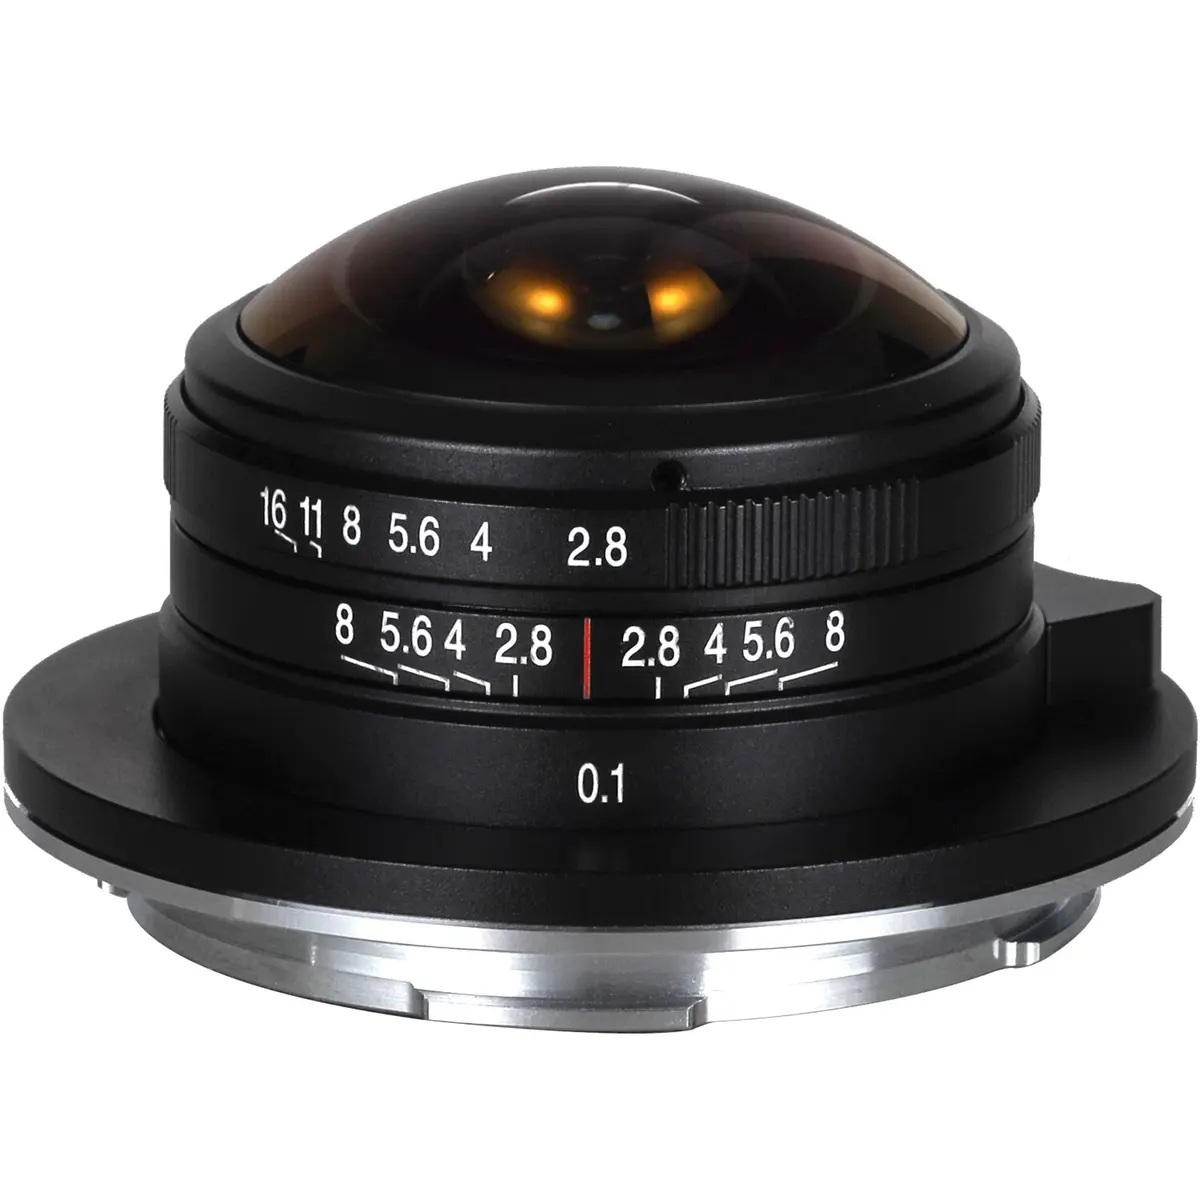 1. Laowa CF 4mm F2.8 Circular Fisheye (Nikon Z)